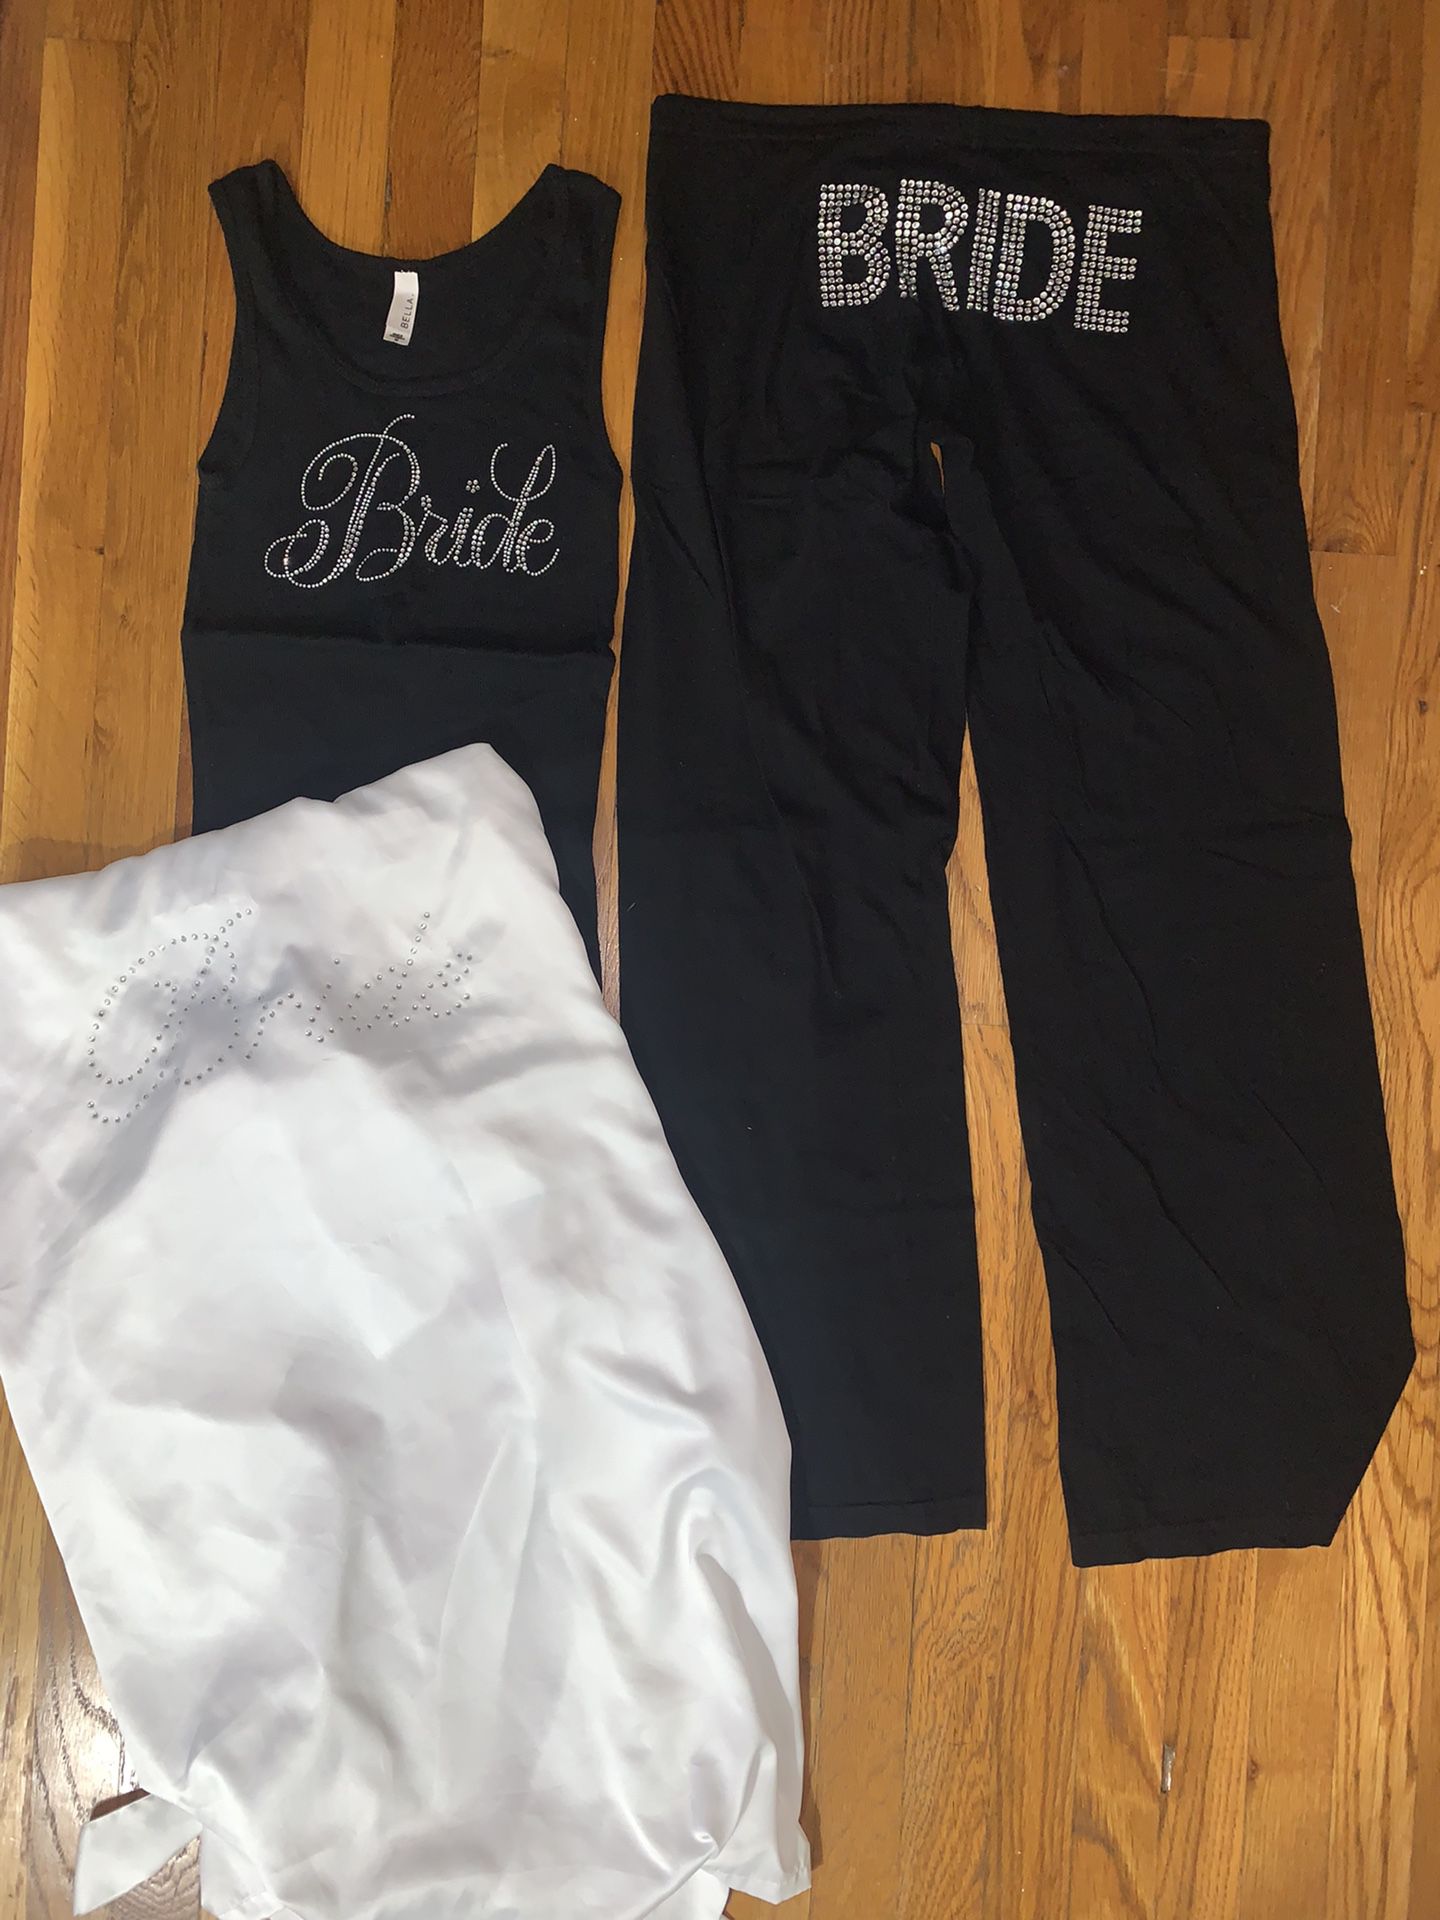 BRIDE Clothes (Tank: M / Pants: L / Robe: M) $20